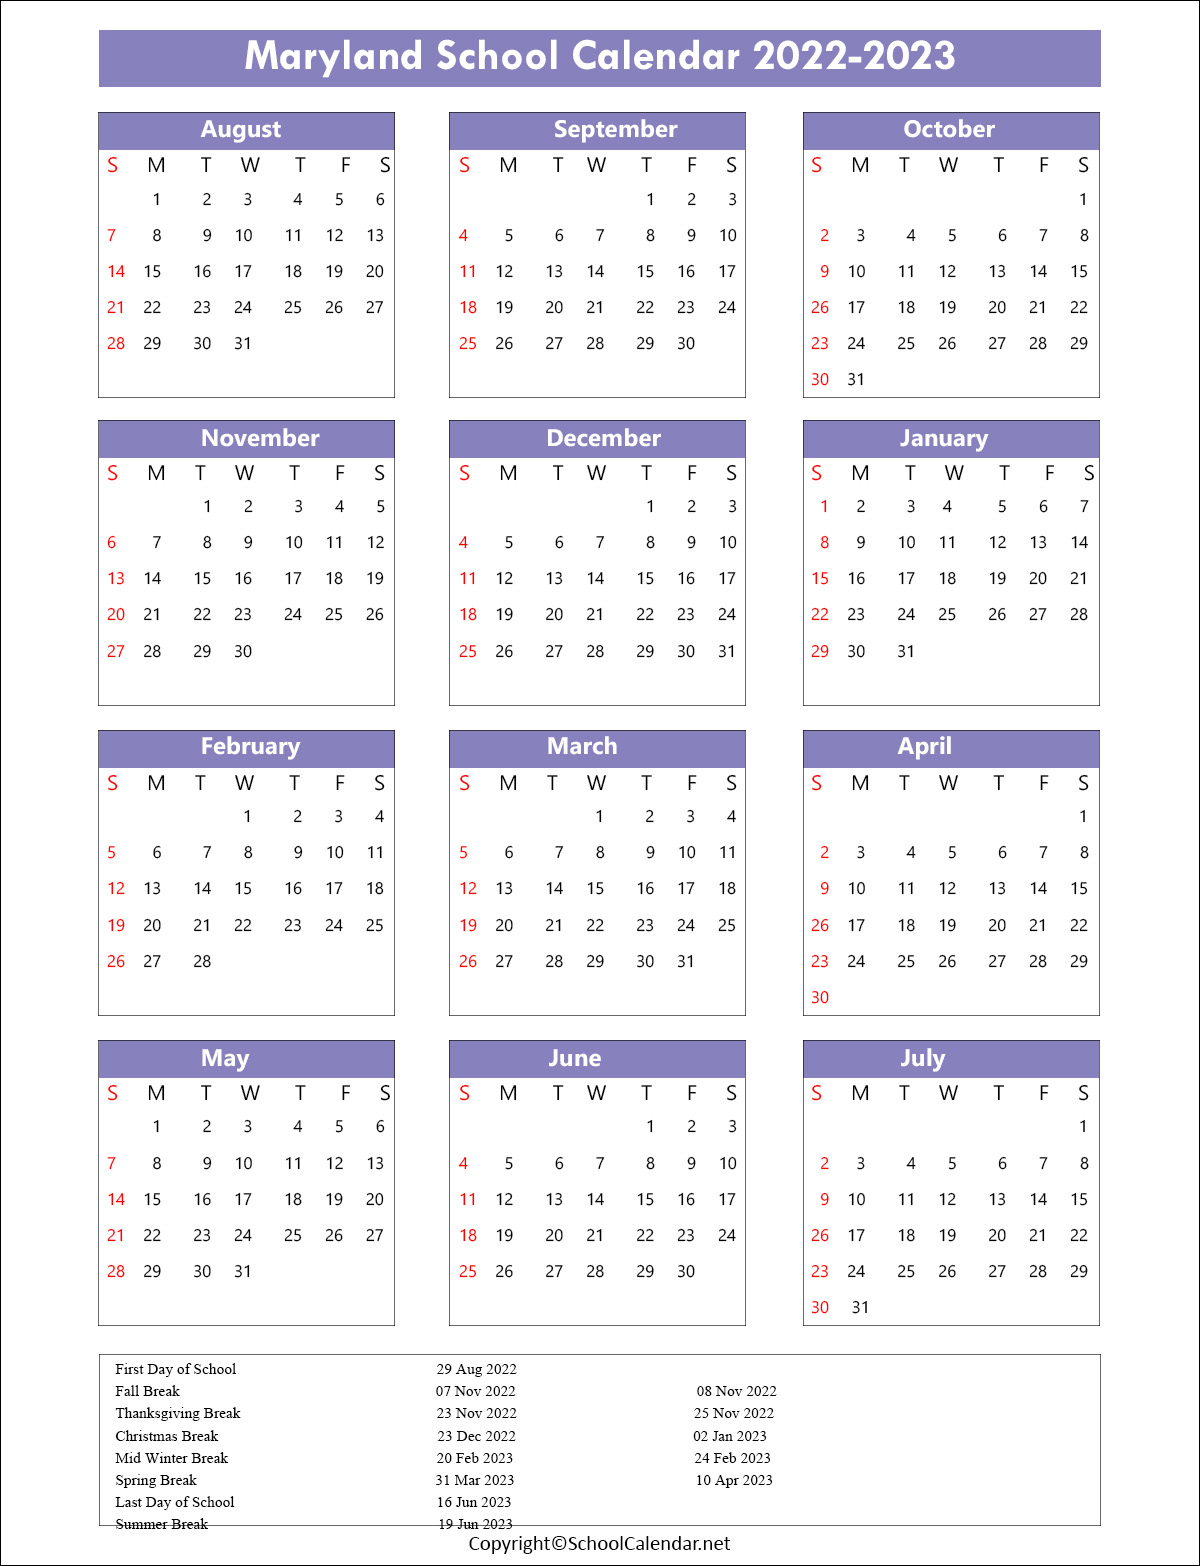 Maryland School Calendar 2022